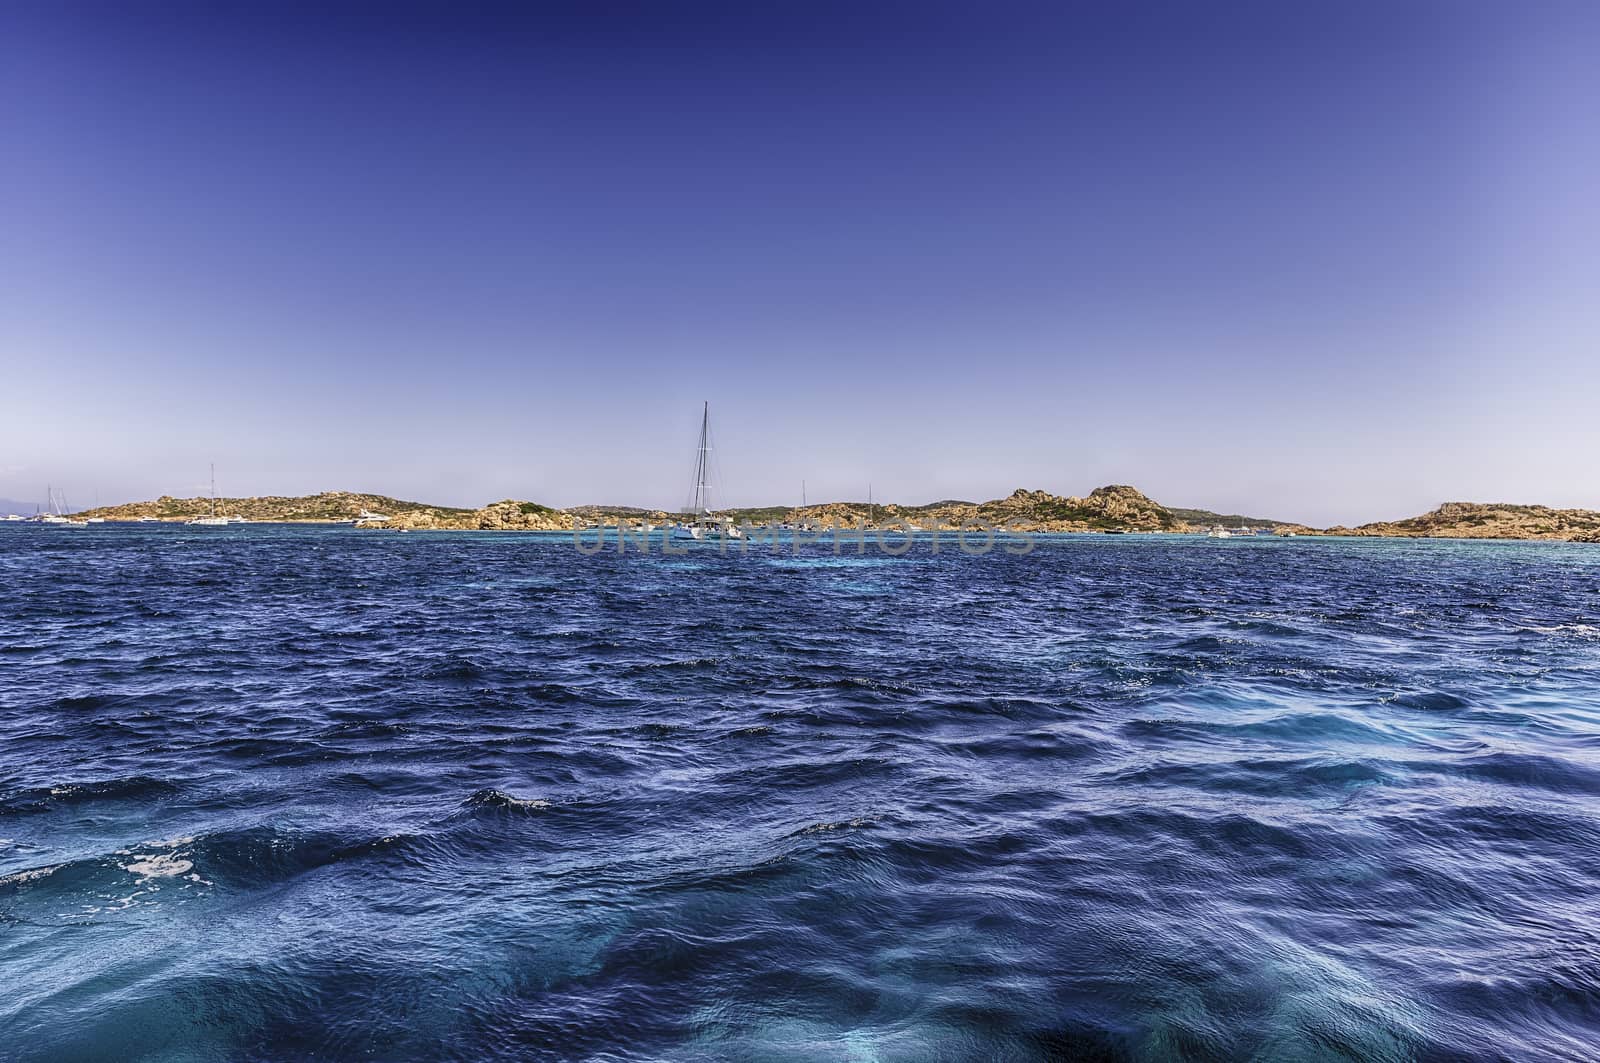 View of the coast in the Island of Budelli, Maddalena Archipelago, near the strait of Bonifacio in northern Sardinia, Italy